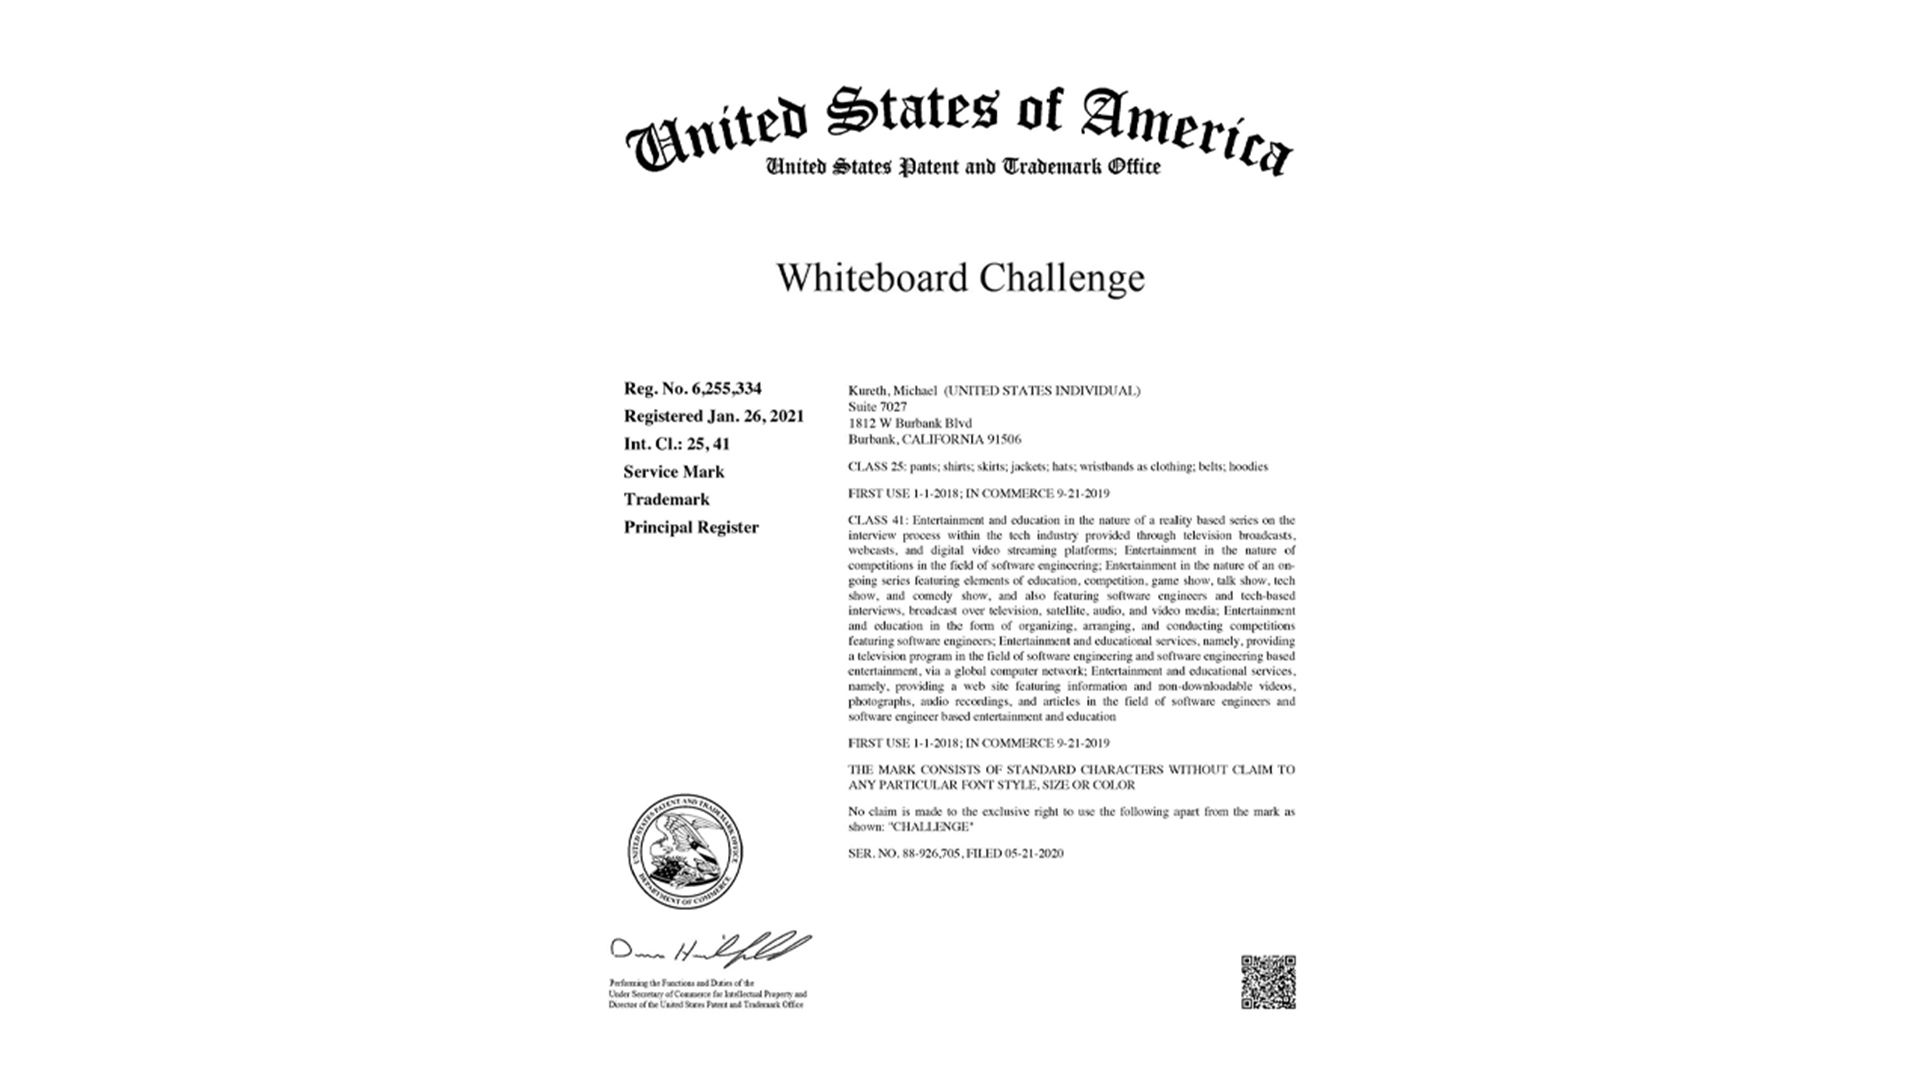 USPTO Issues "Whiteboard Challenge" Registered Trademark to Michael Kureth